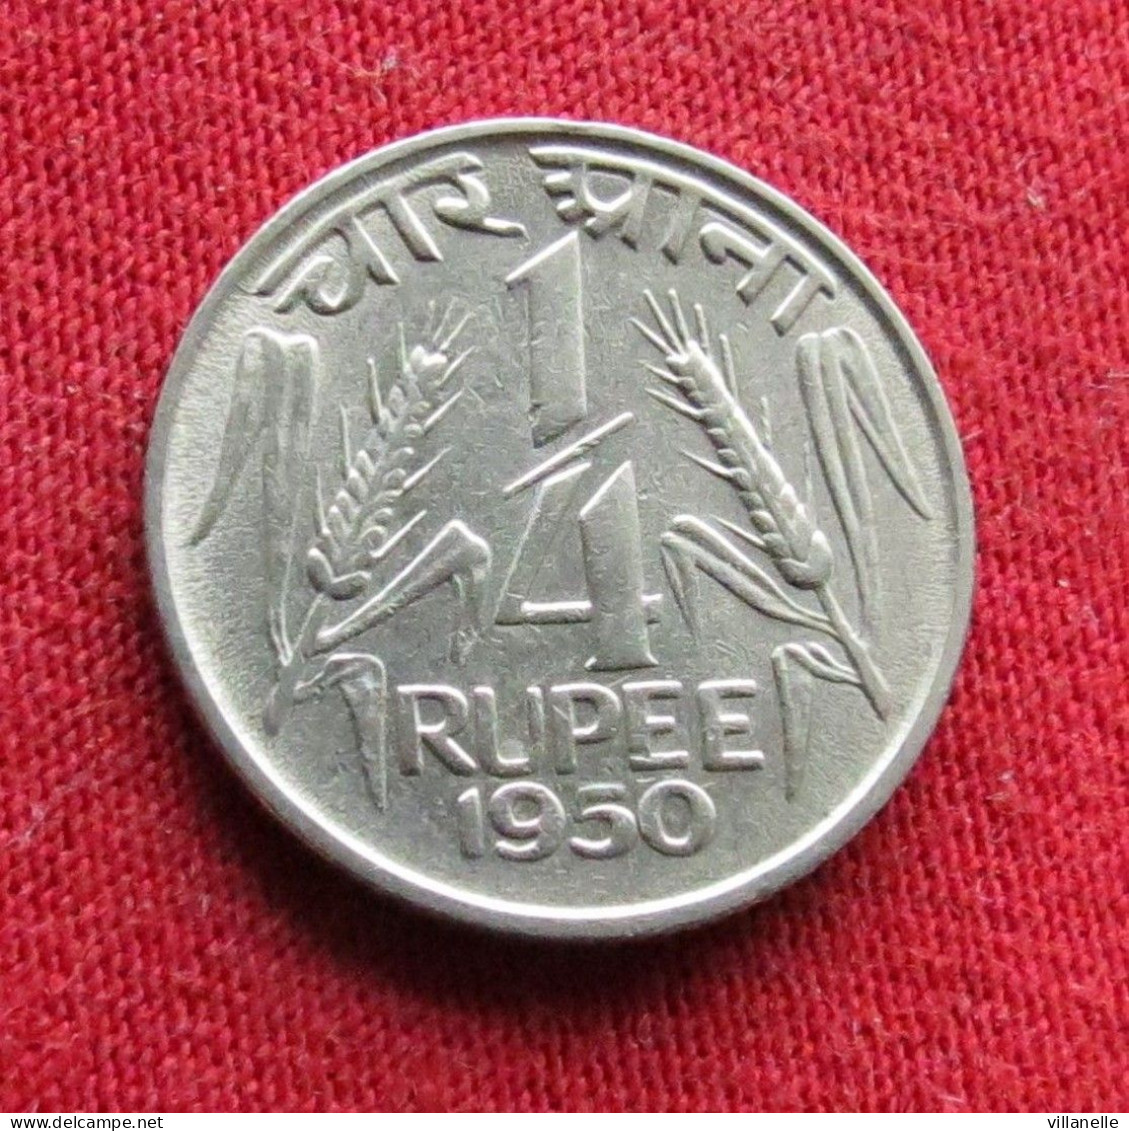 India 1/4 Rupee 1950 C KM# 5 *VT Inde Indien Indies Indie Roupies - Inde